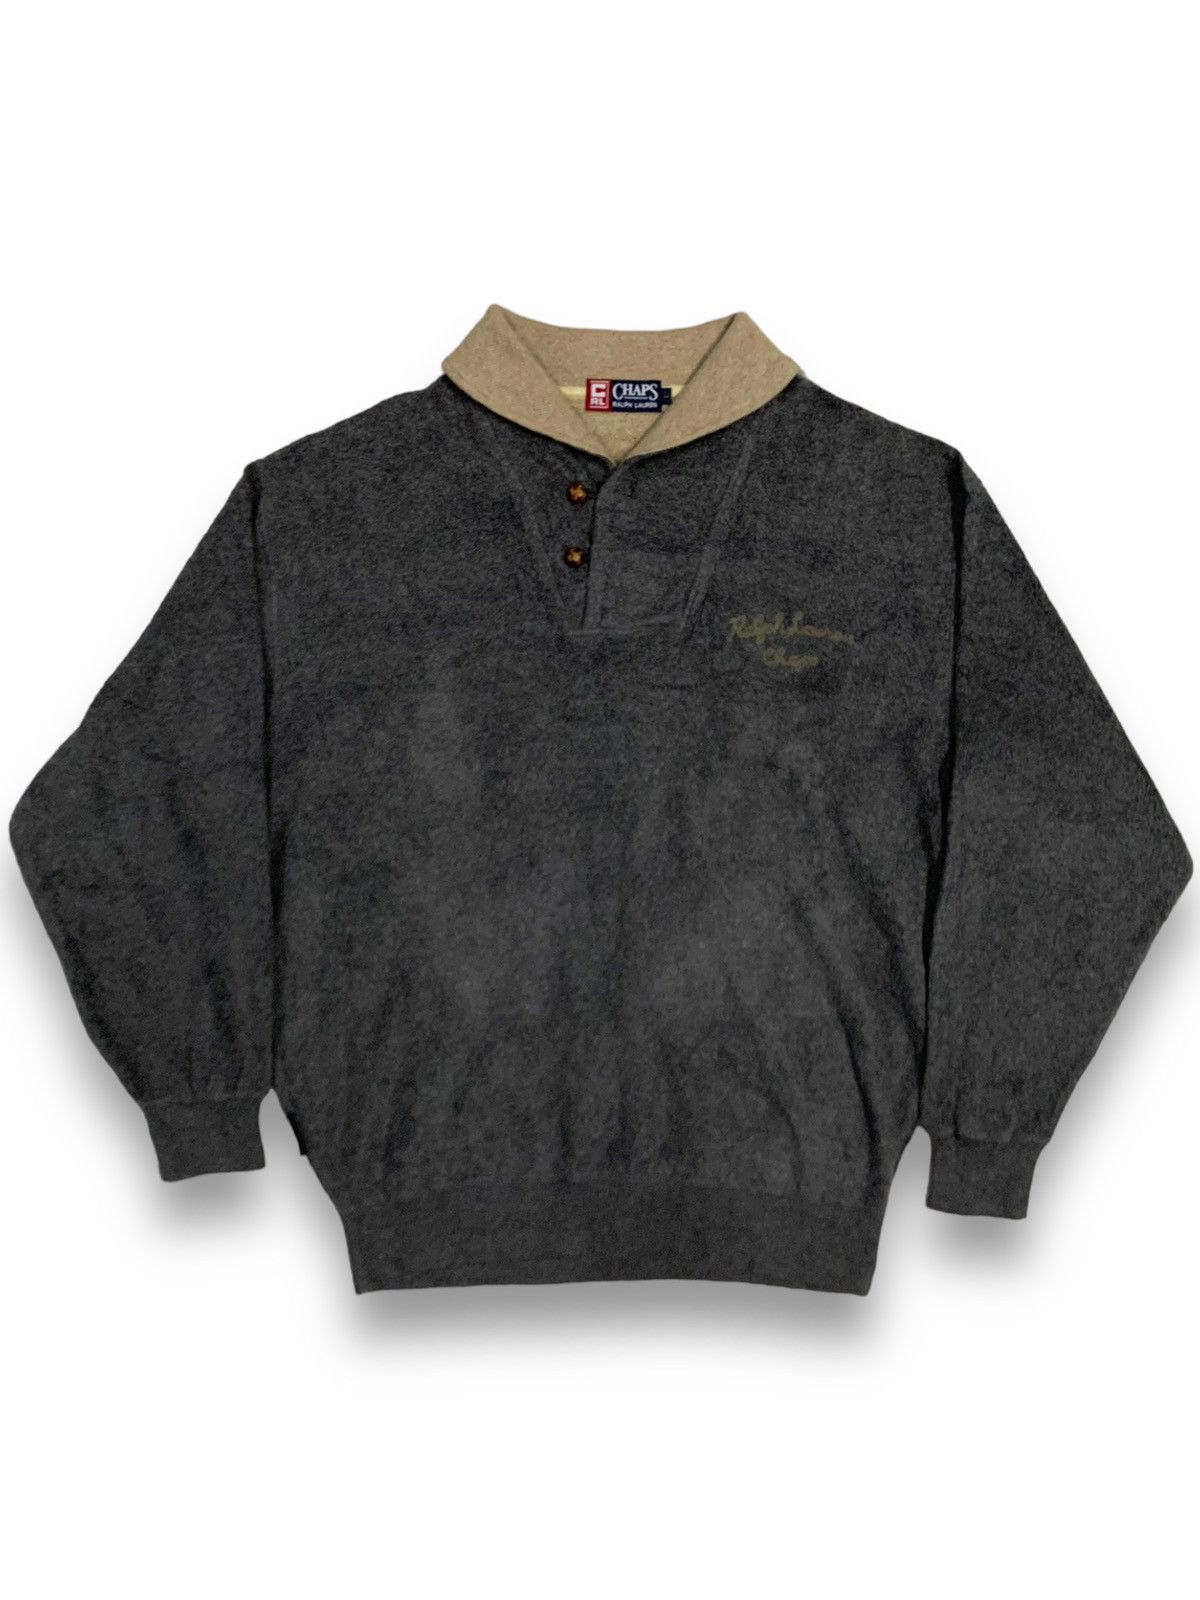 Chaps Ralph Lauren Vintage Spellout Sweater –